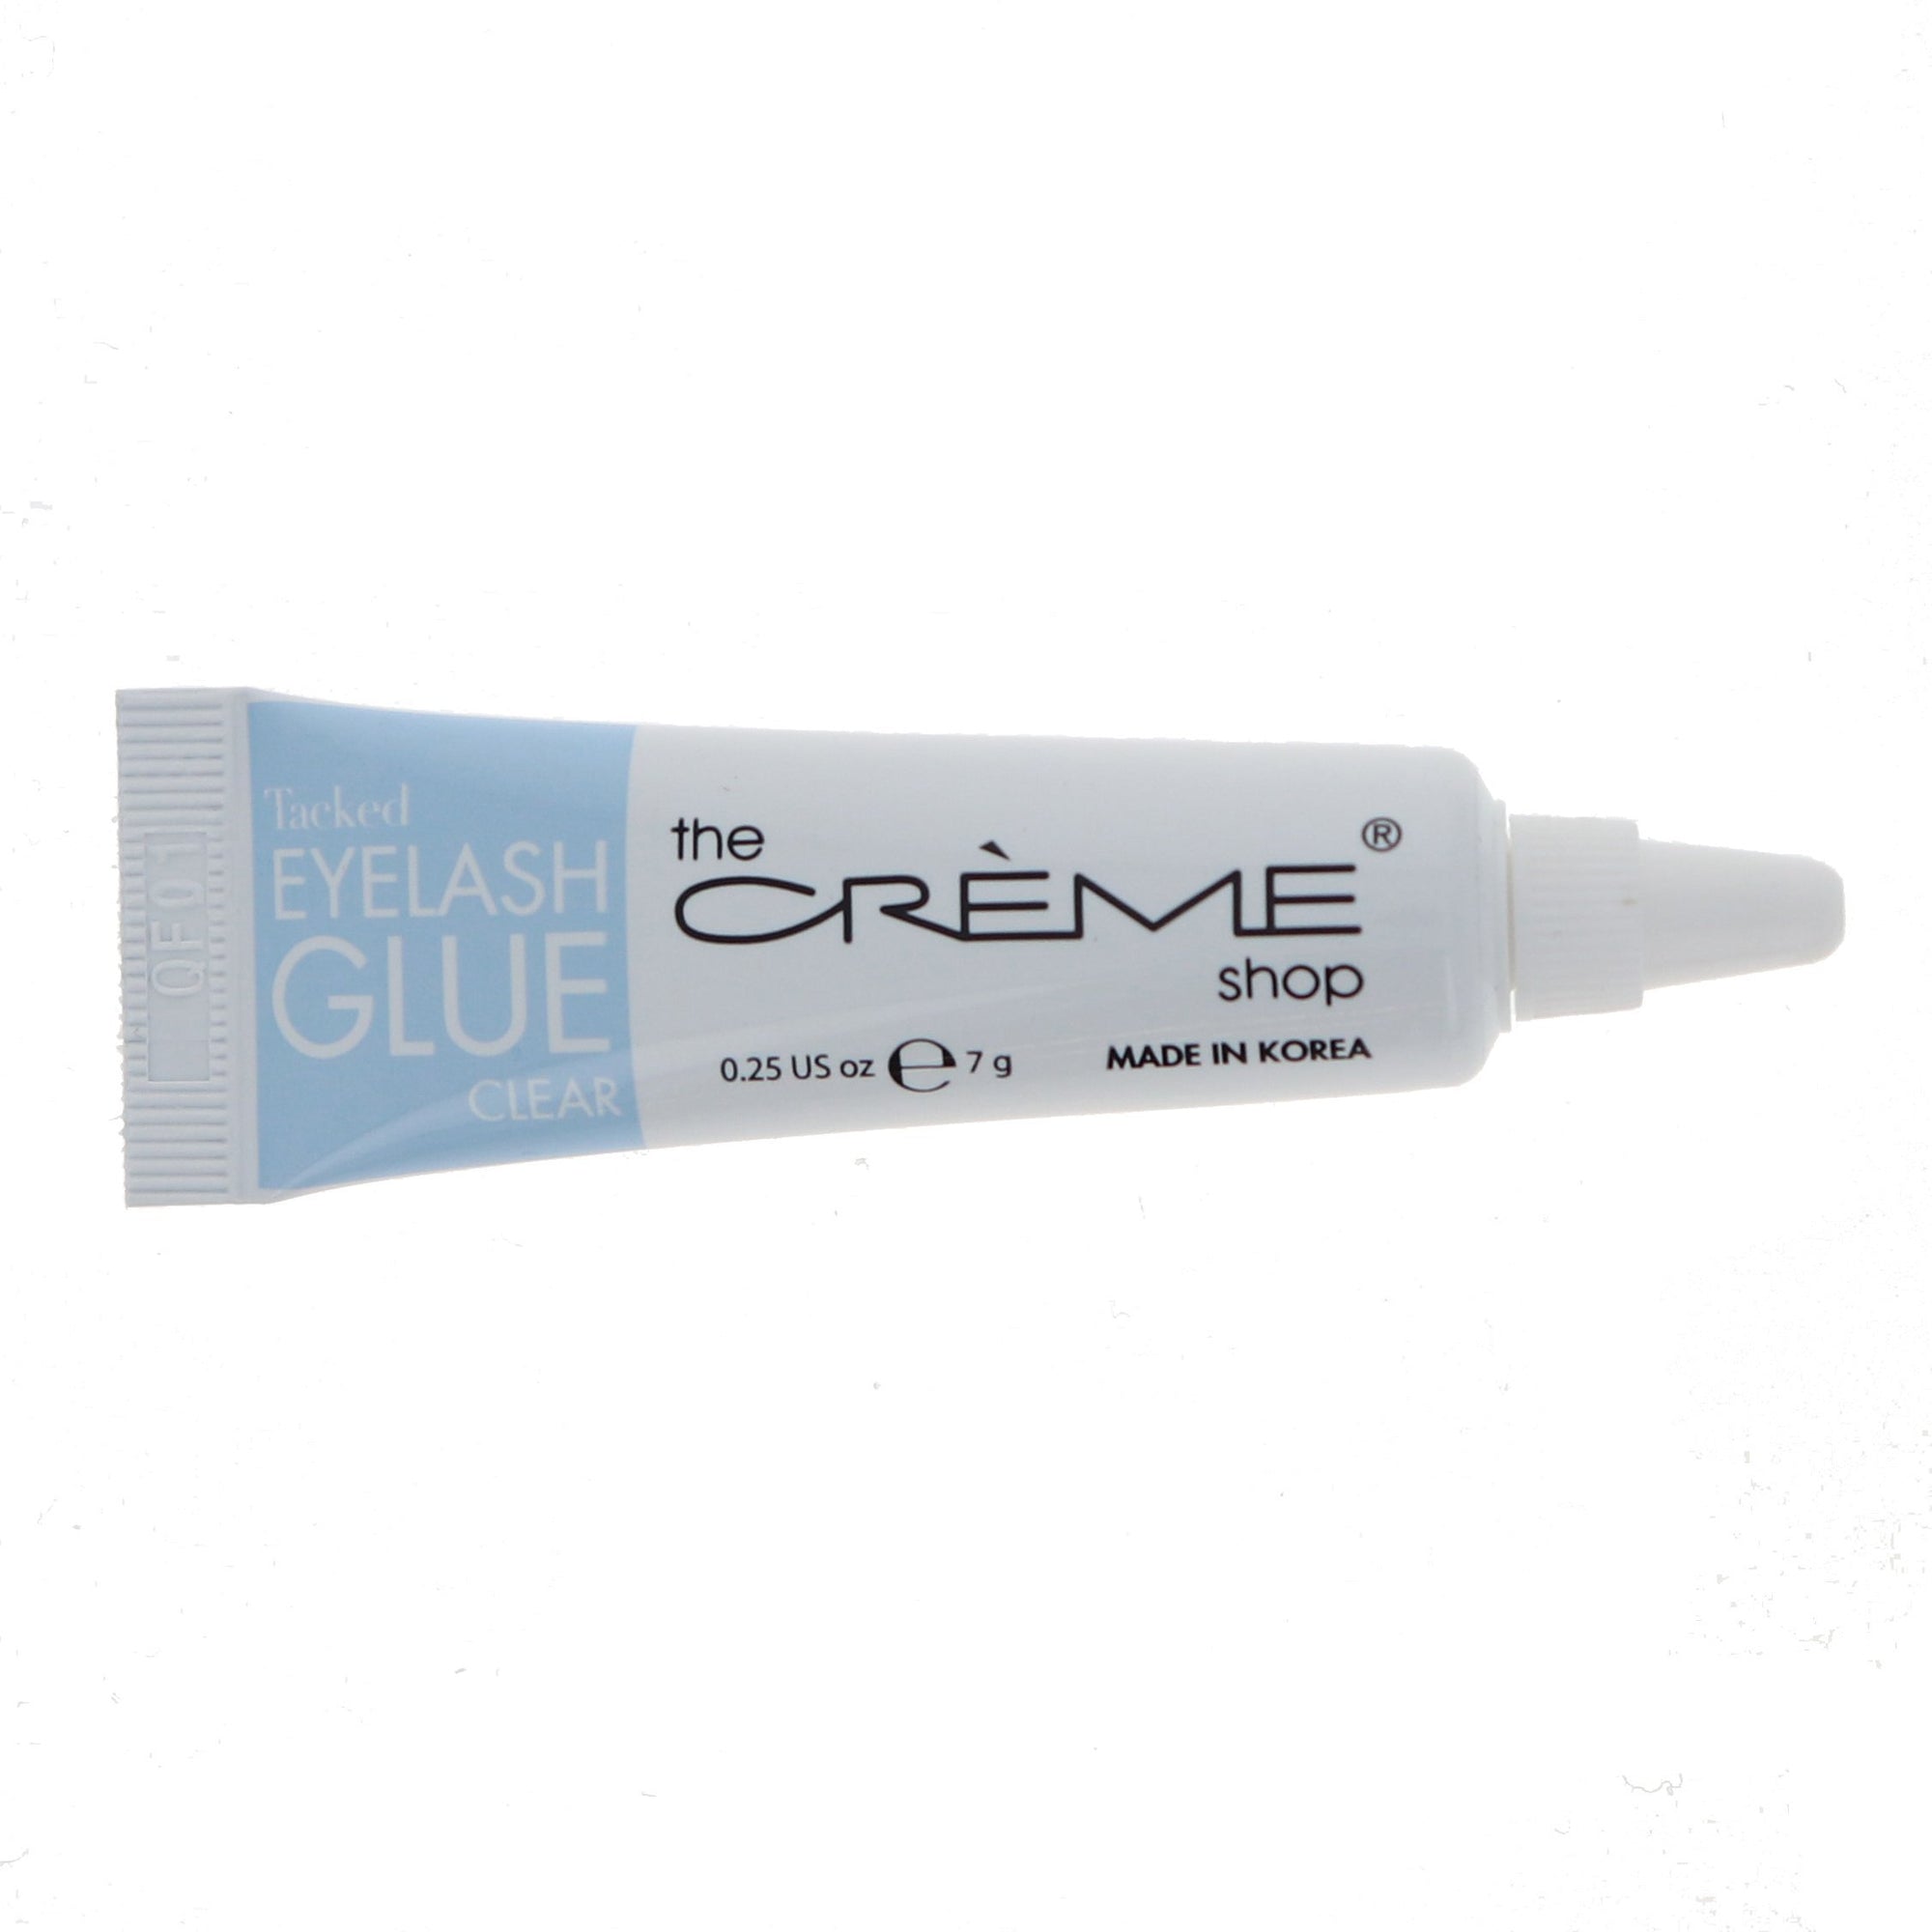 Tacked Eyelash Glue - Clear - The Crème Shop